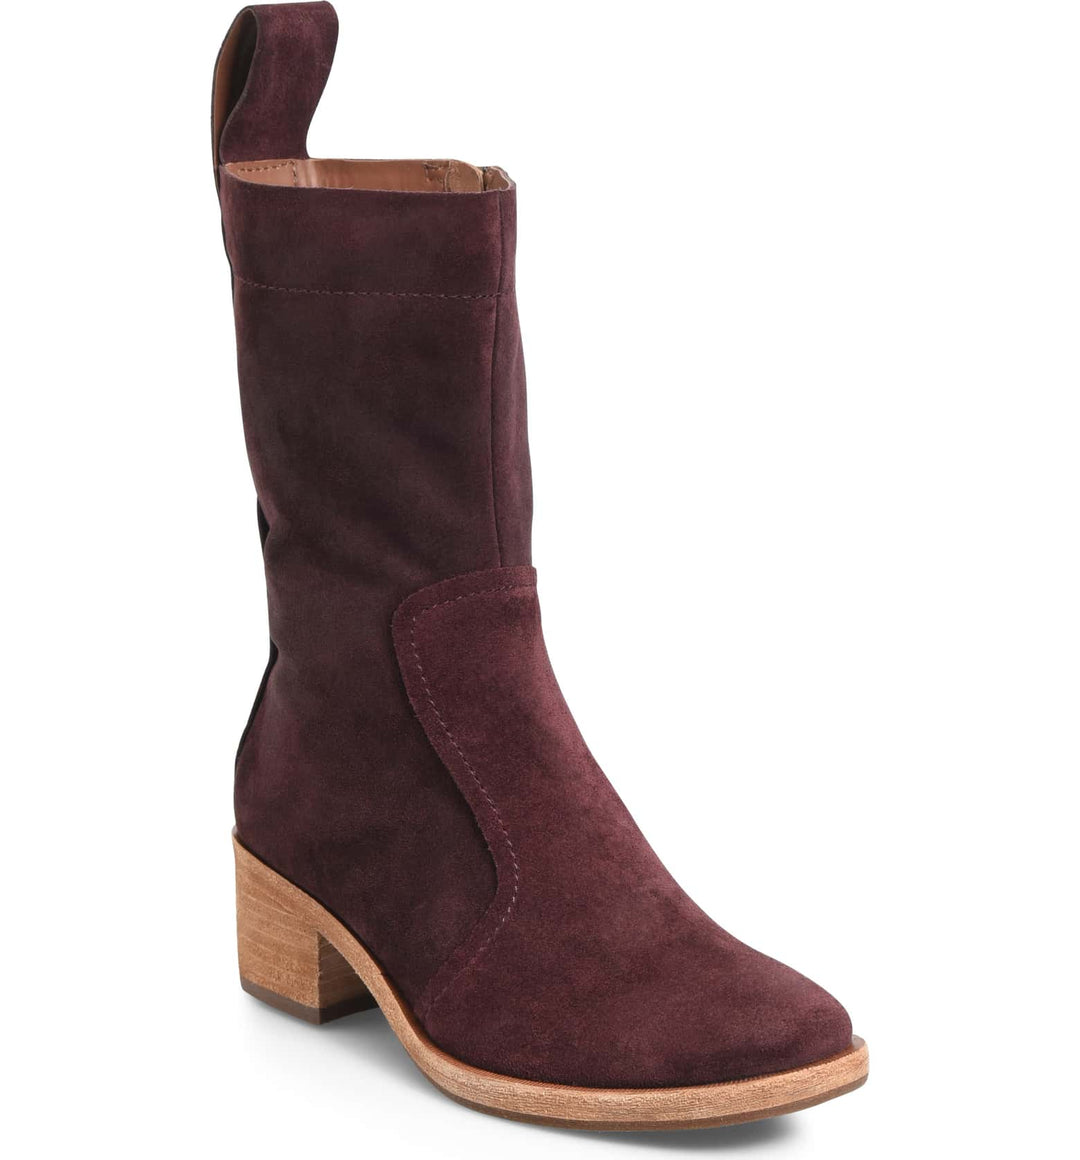 Women's Jewel Burgundy Suede Boot - Orleans Shoe Co.